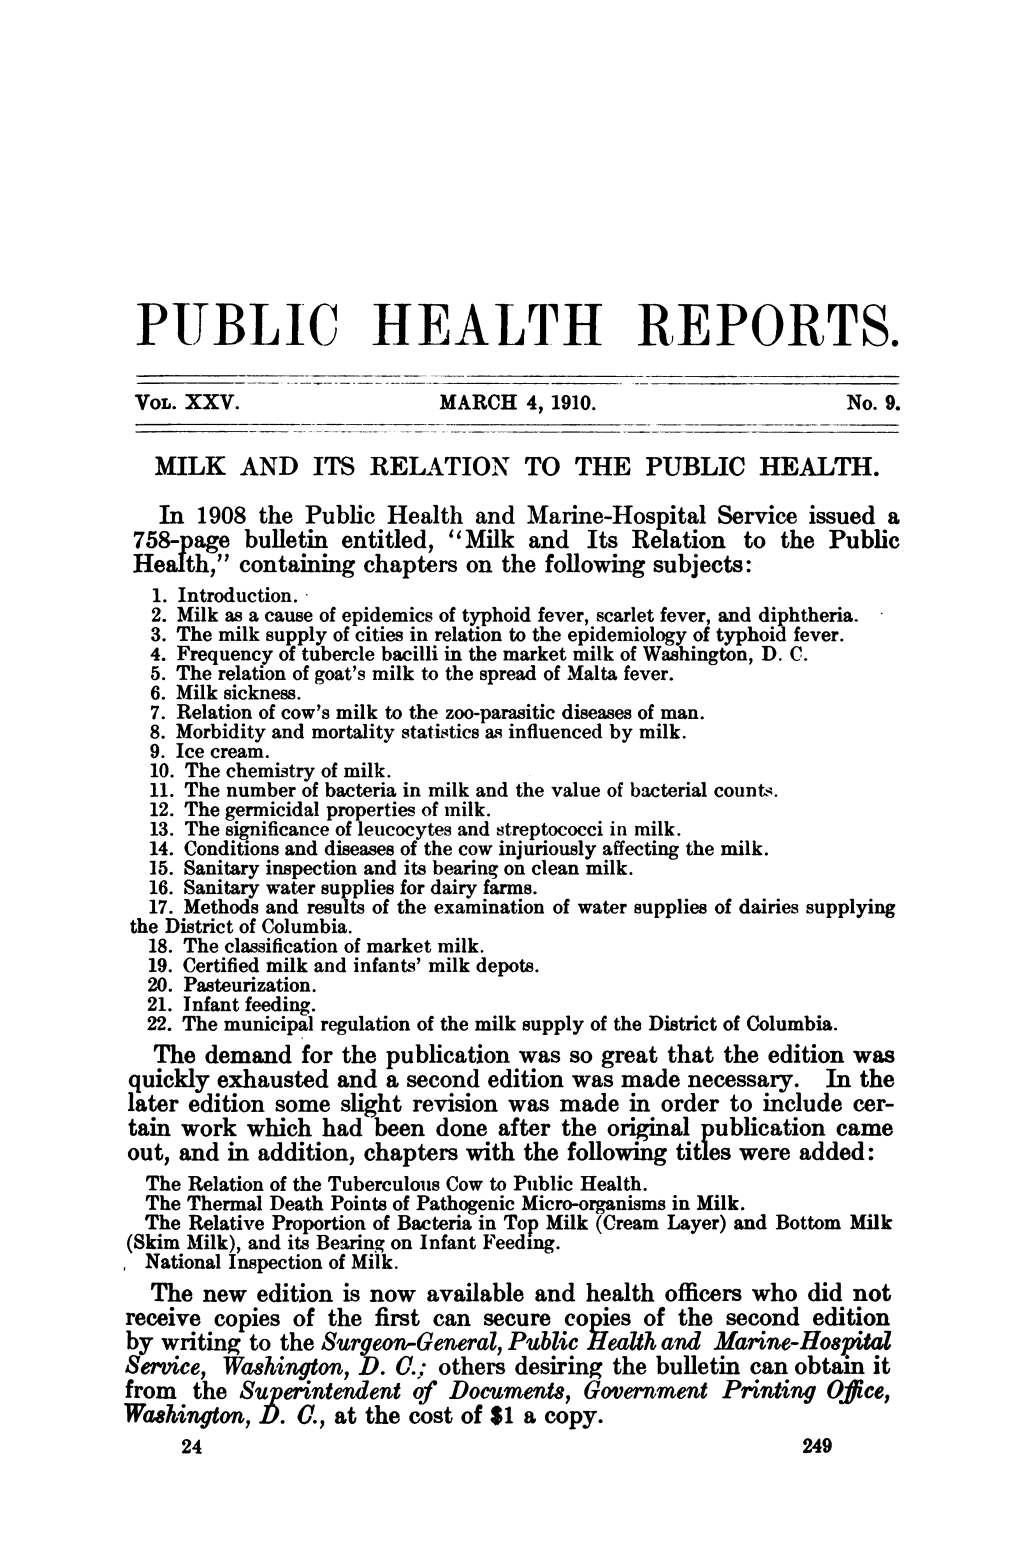 Pujbl1c Health Reports